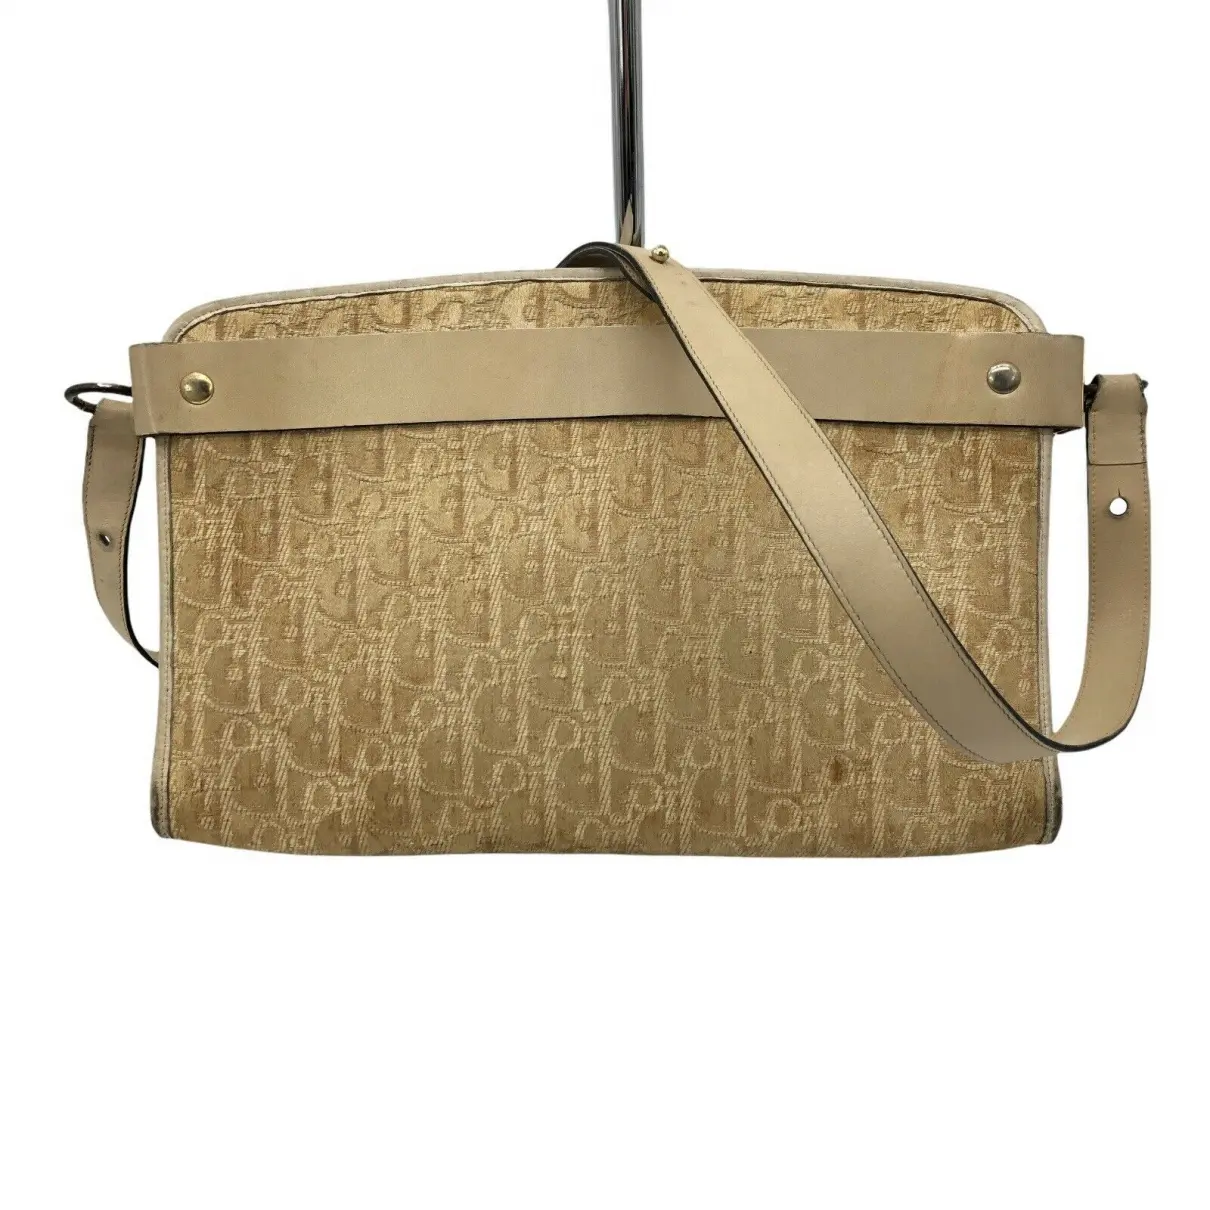 Flight leather handbag